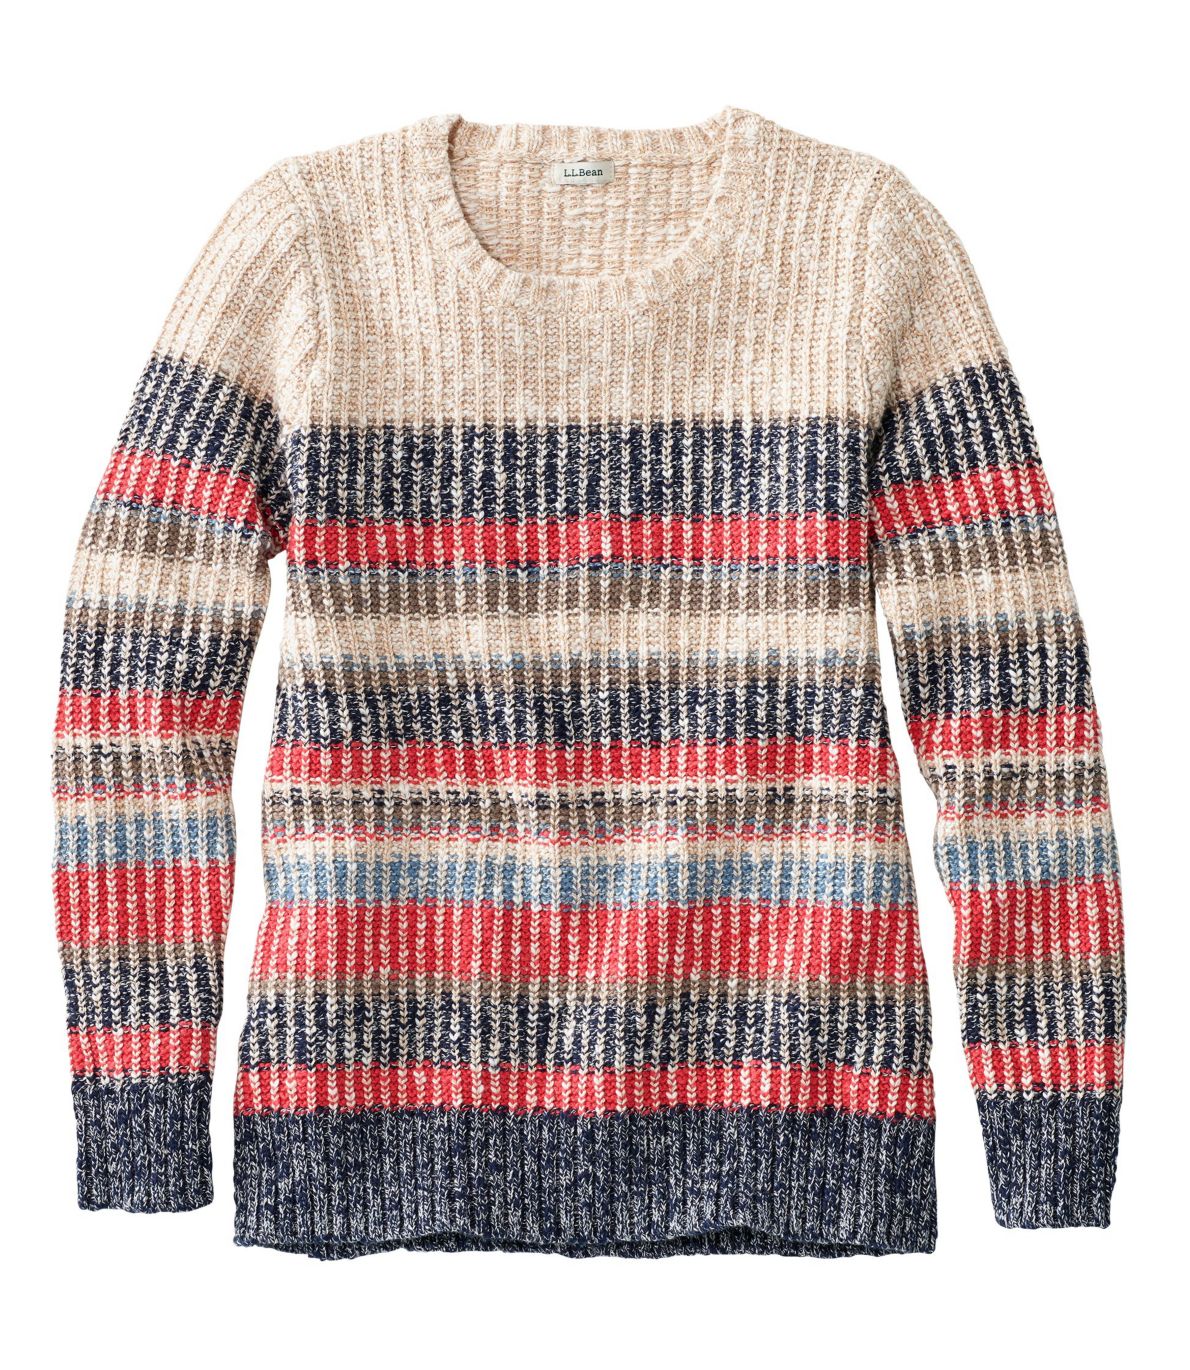 Cotton Ragg Sweater, Marled Crewneck Pullover, Multi Stripe